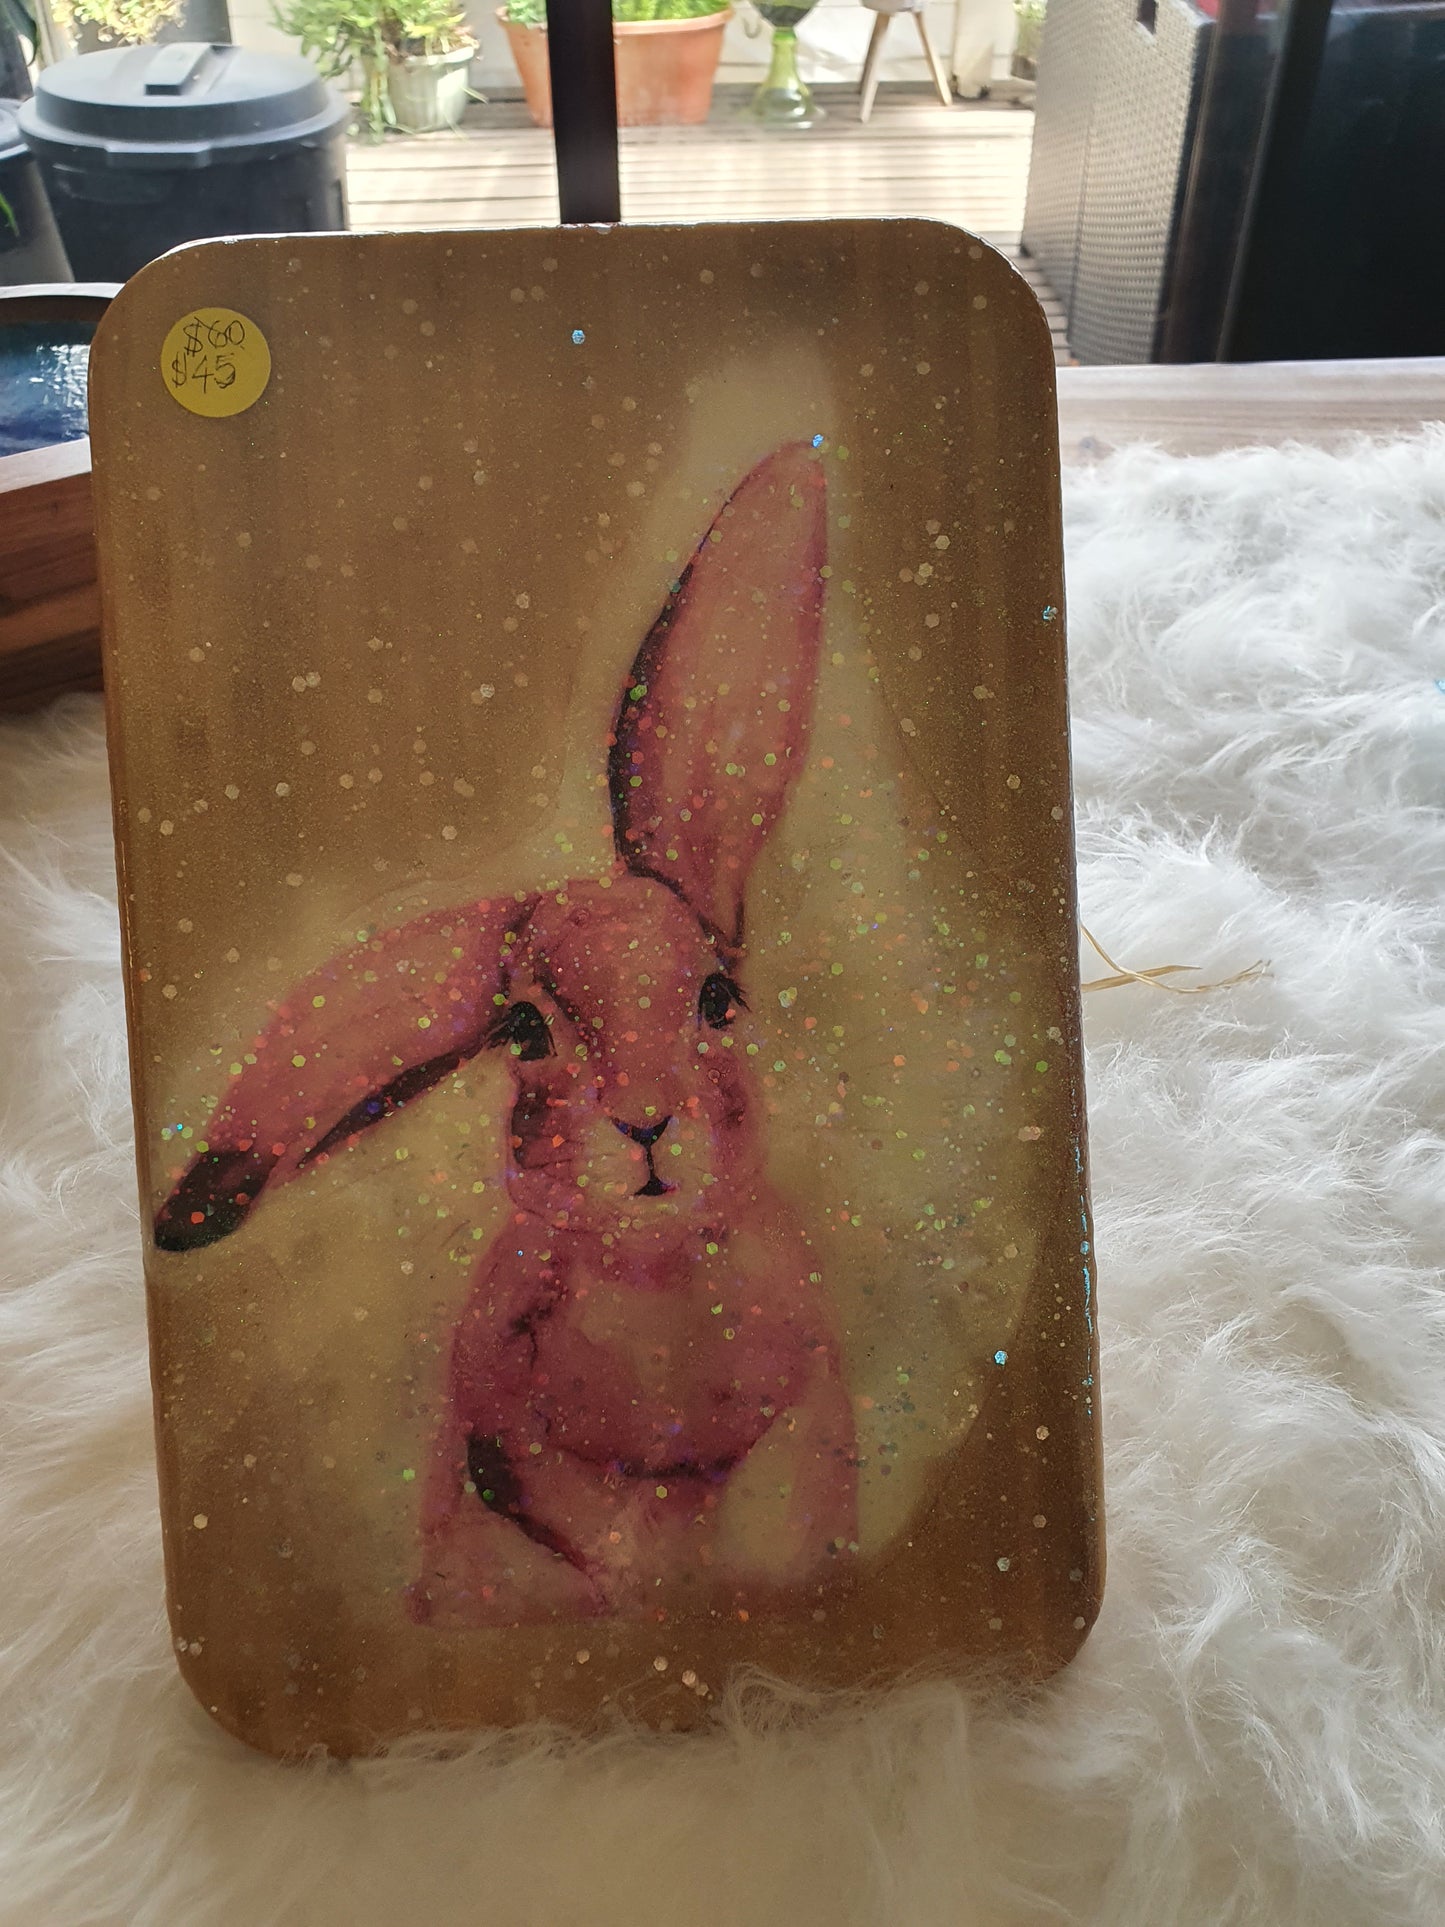 Raised bunny board